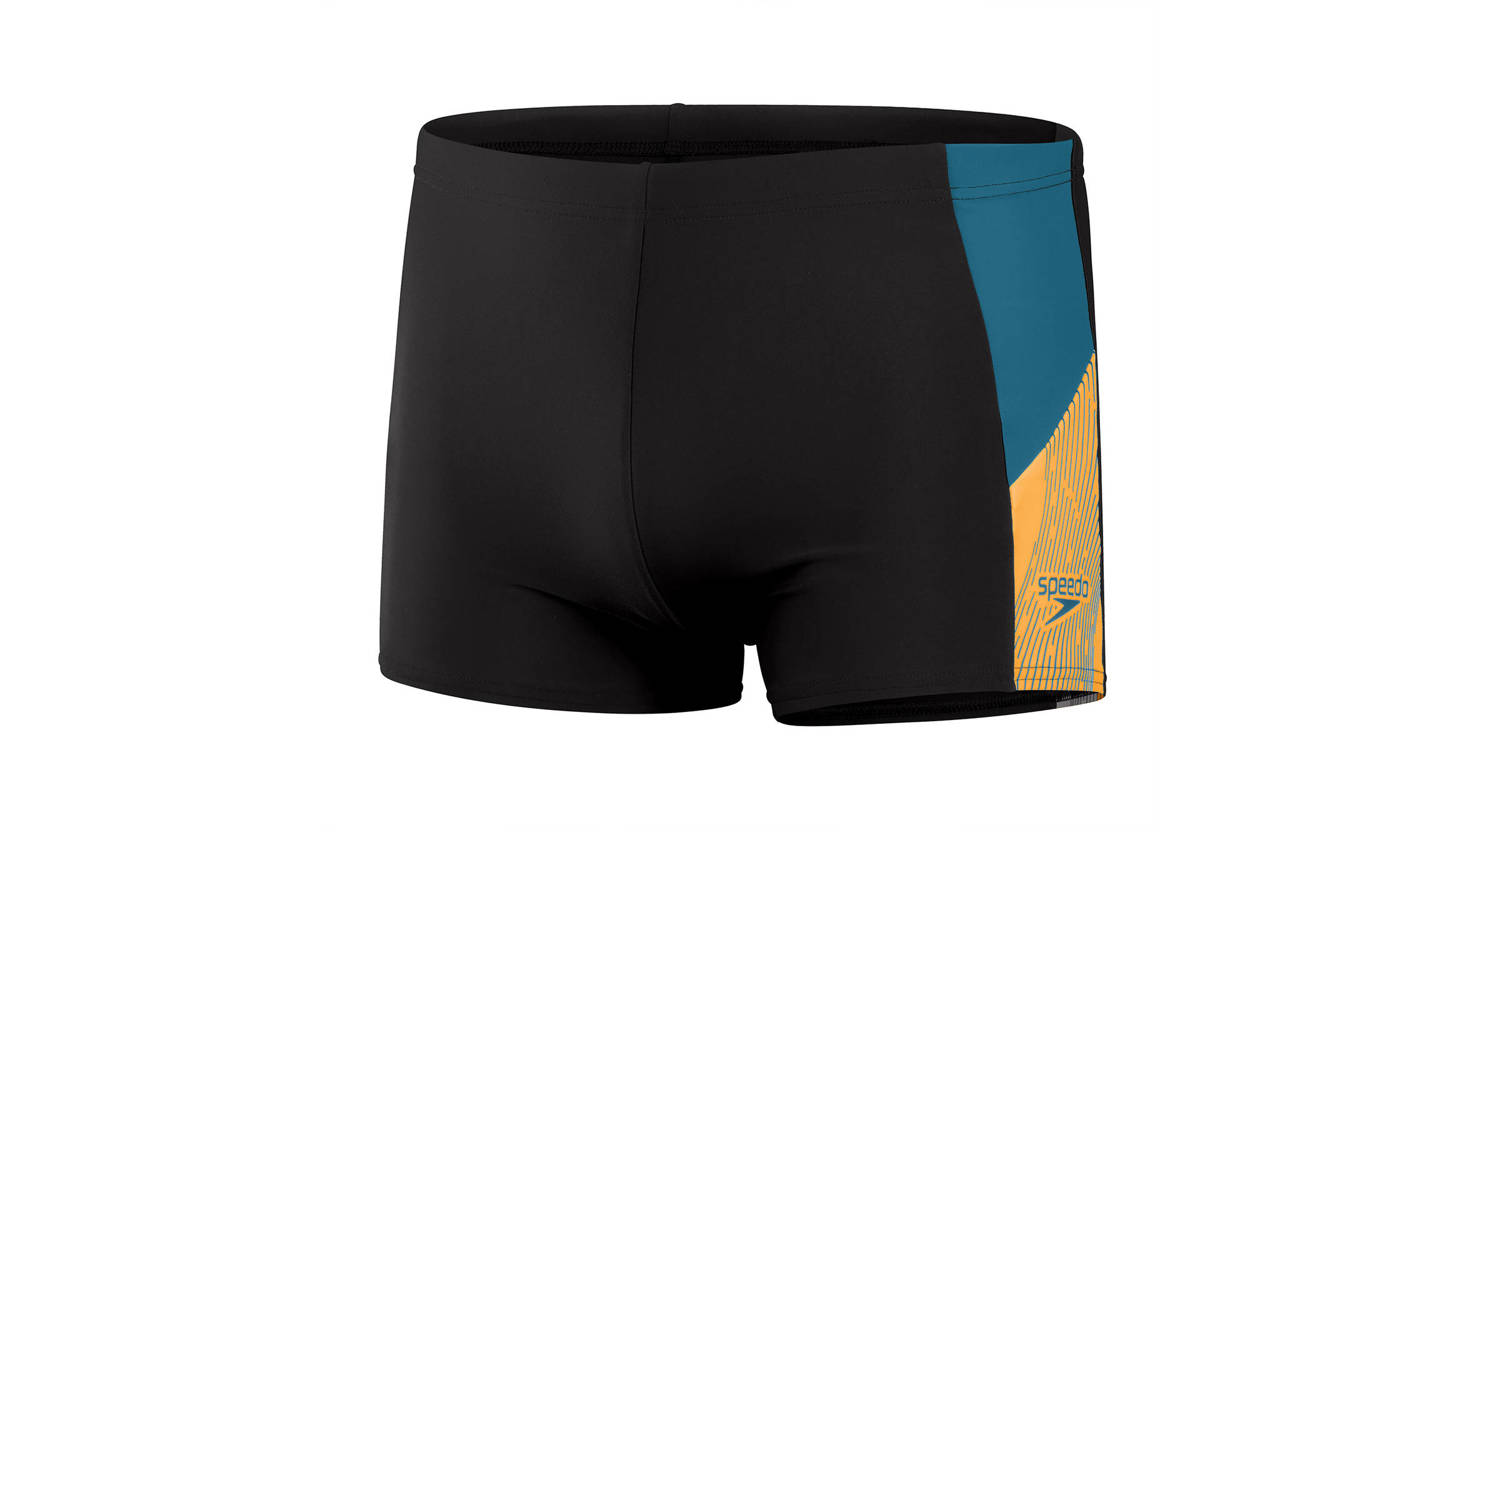 Speedo ECO EnduraFlex zwemboxer Dive zwart oranje